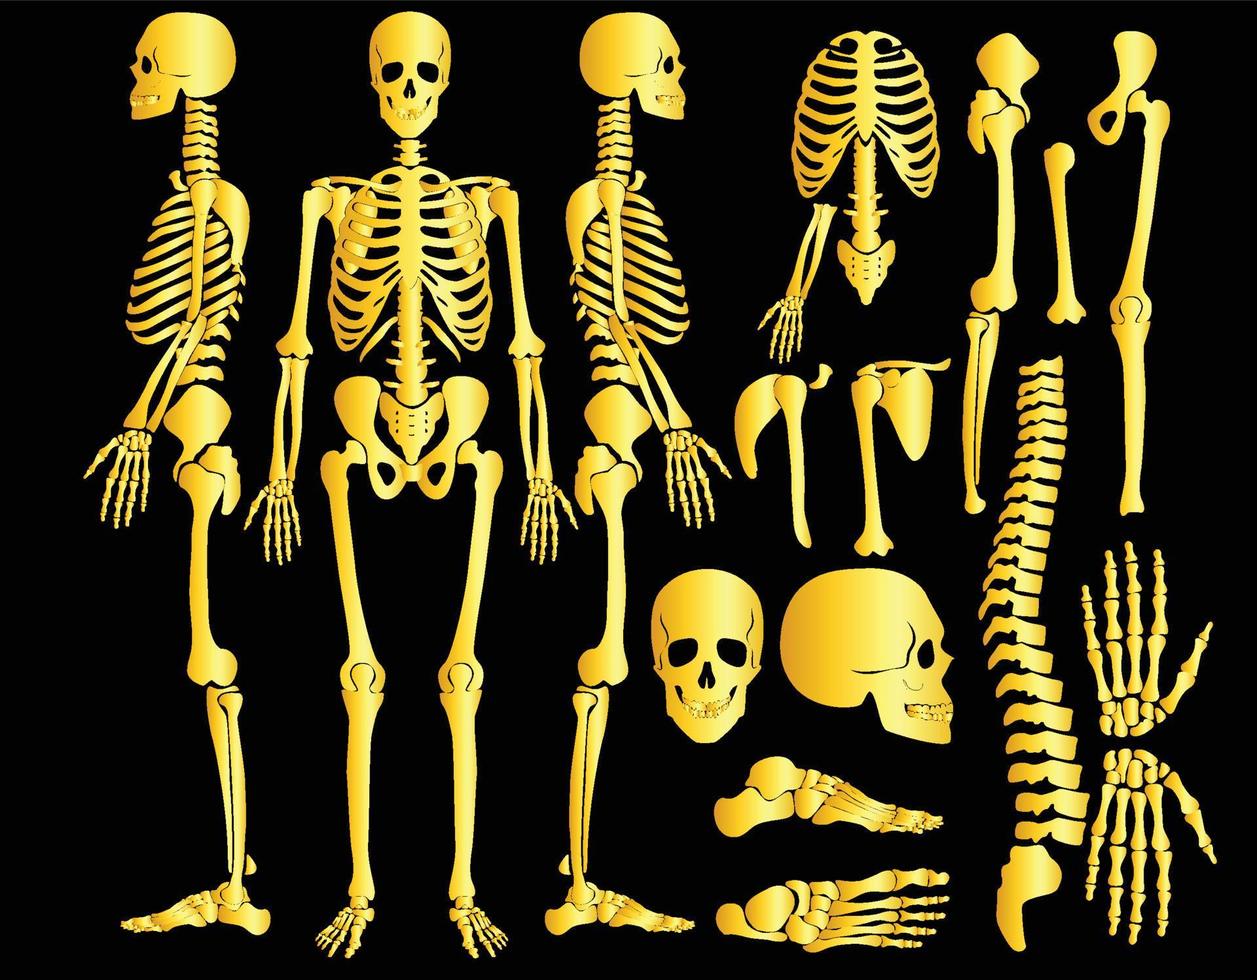 Golden human bones skeleton silhouette collection set vector